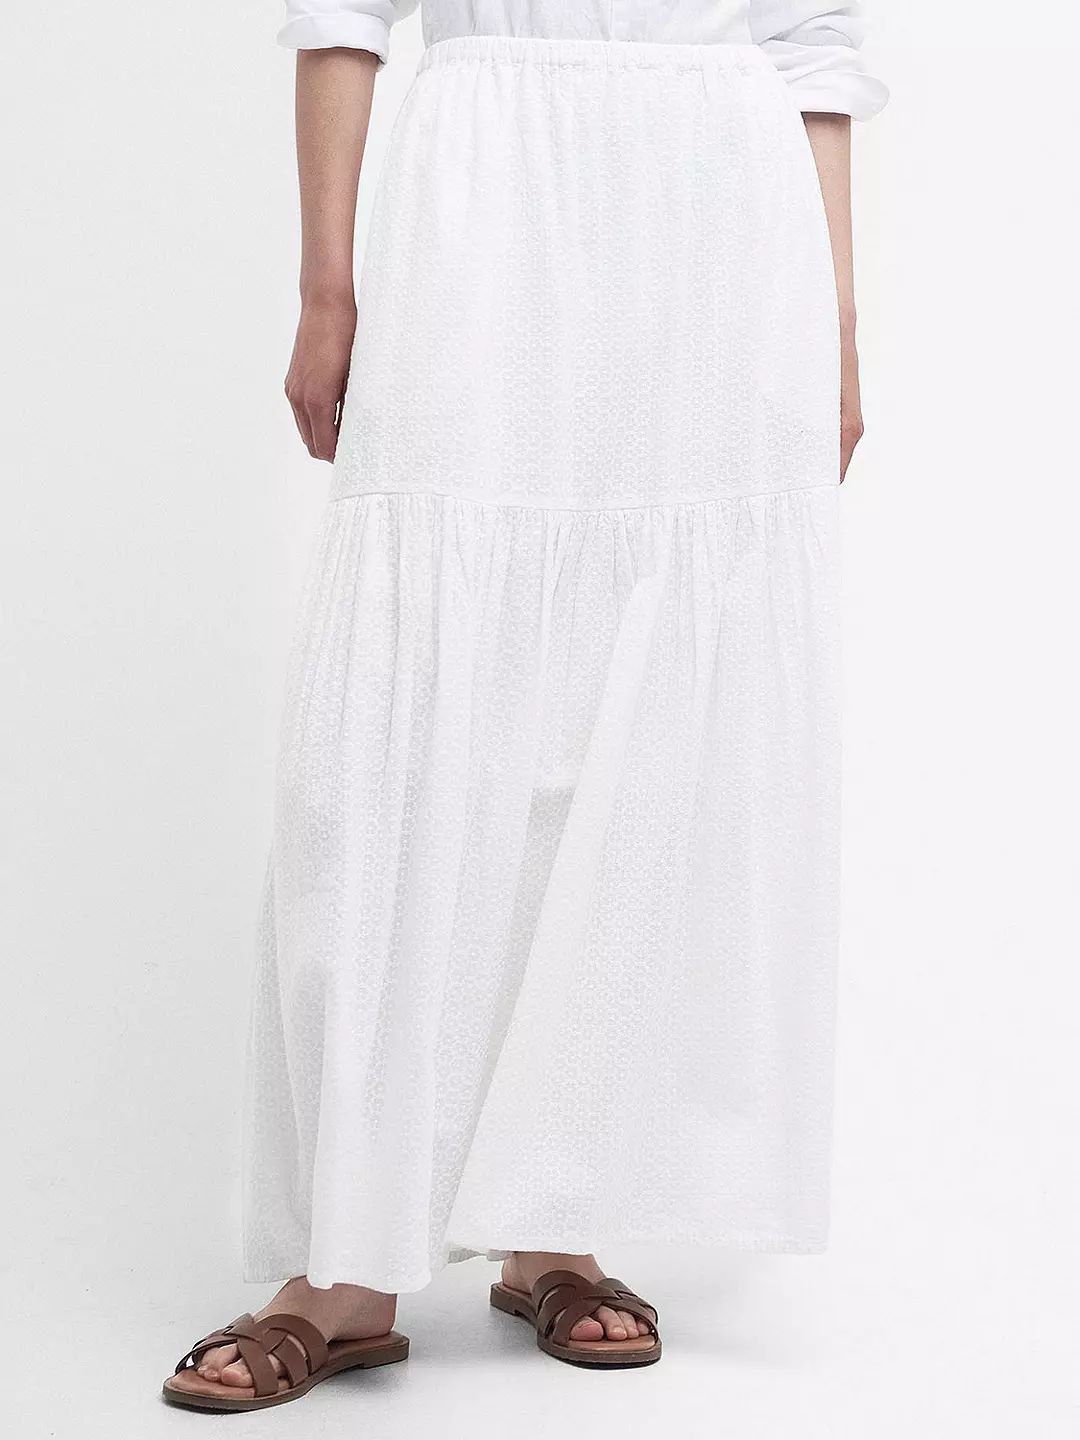 Barbour Kelley Broderie Anglaise Maxi Skirt, White | John Lewis (UK)